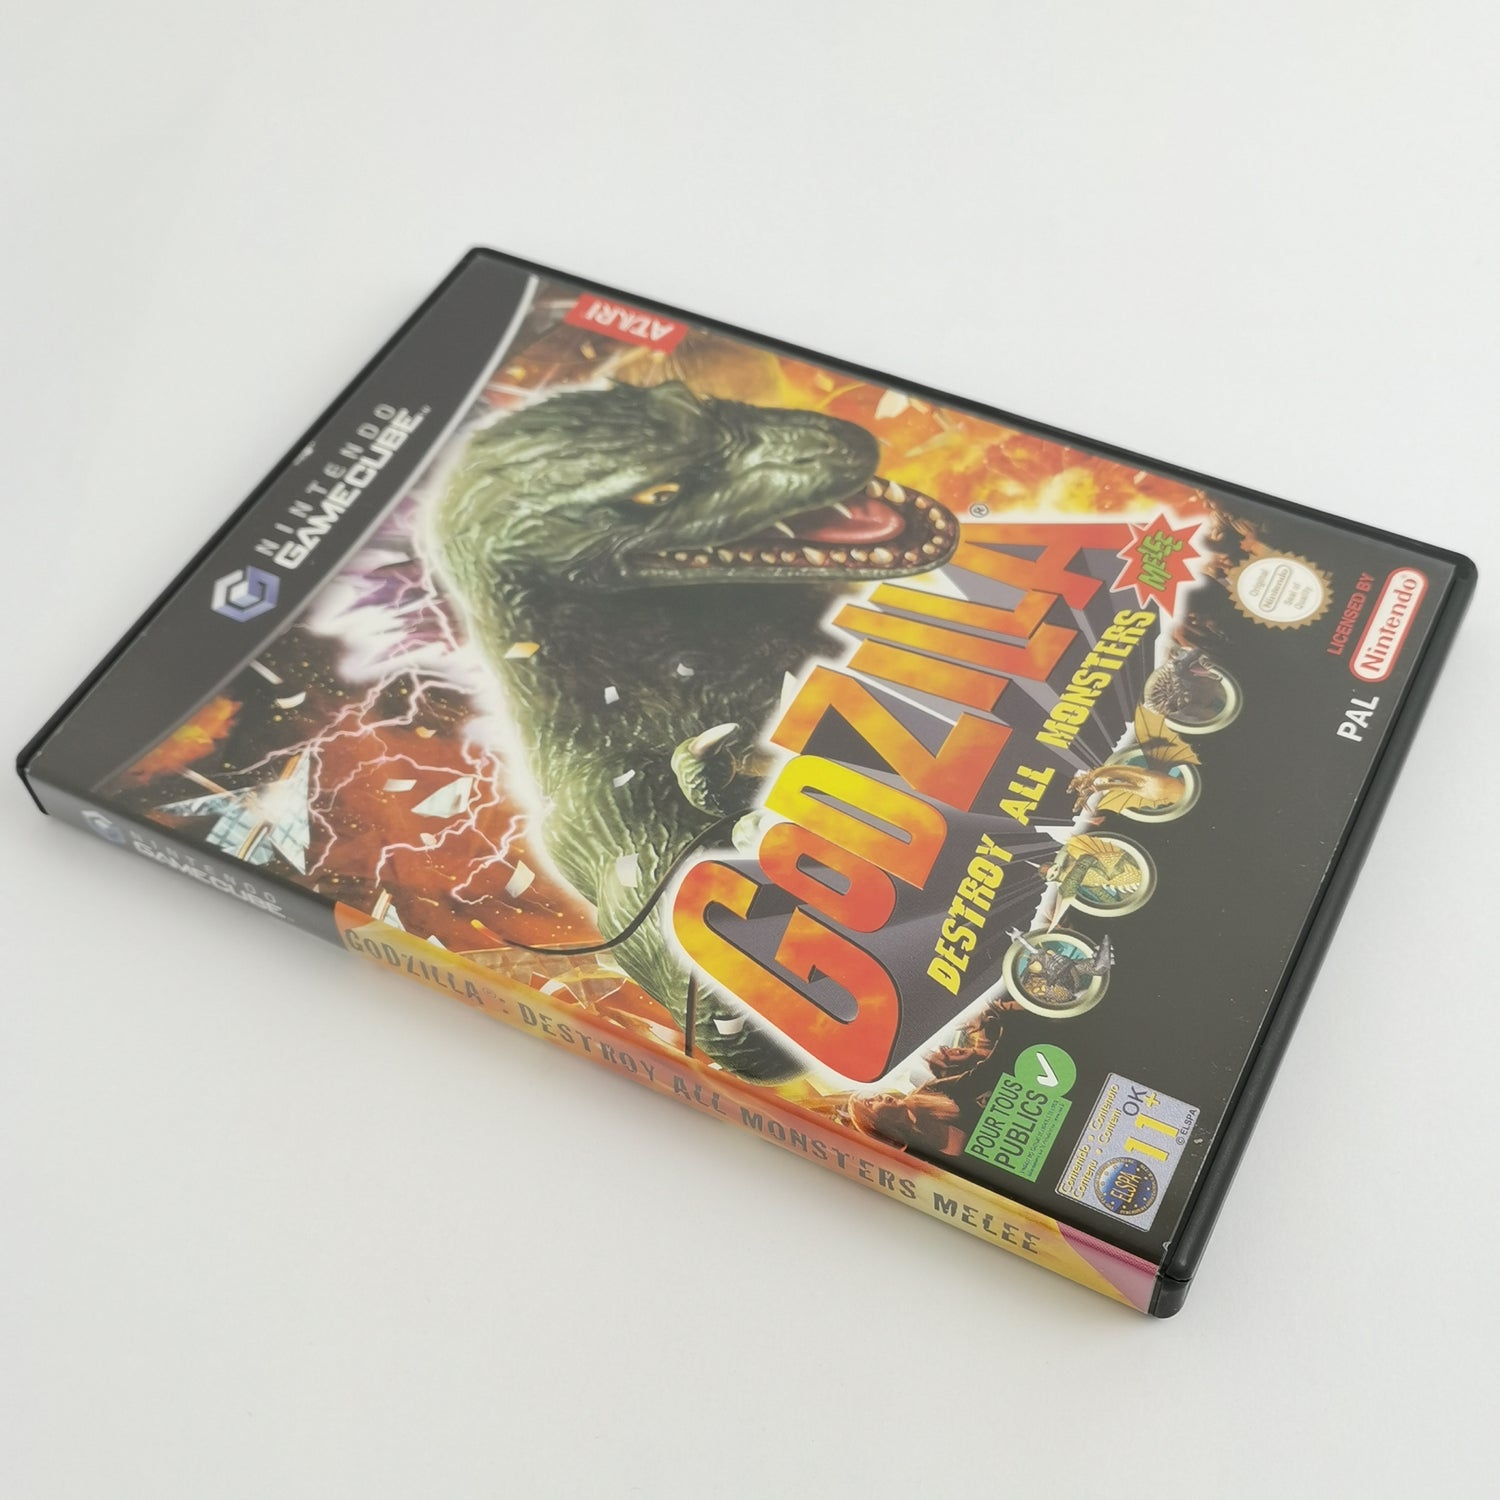 Nintendo Gamecube Spiel : Godzilla Destroy All Monsters Melee | OVP - PAL